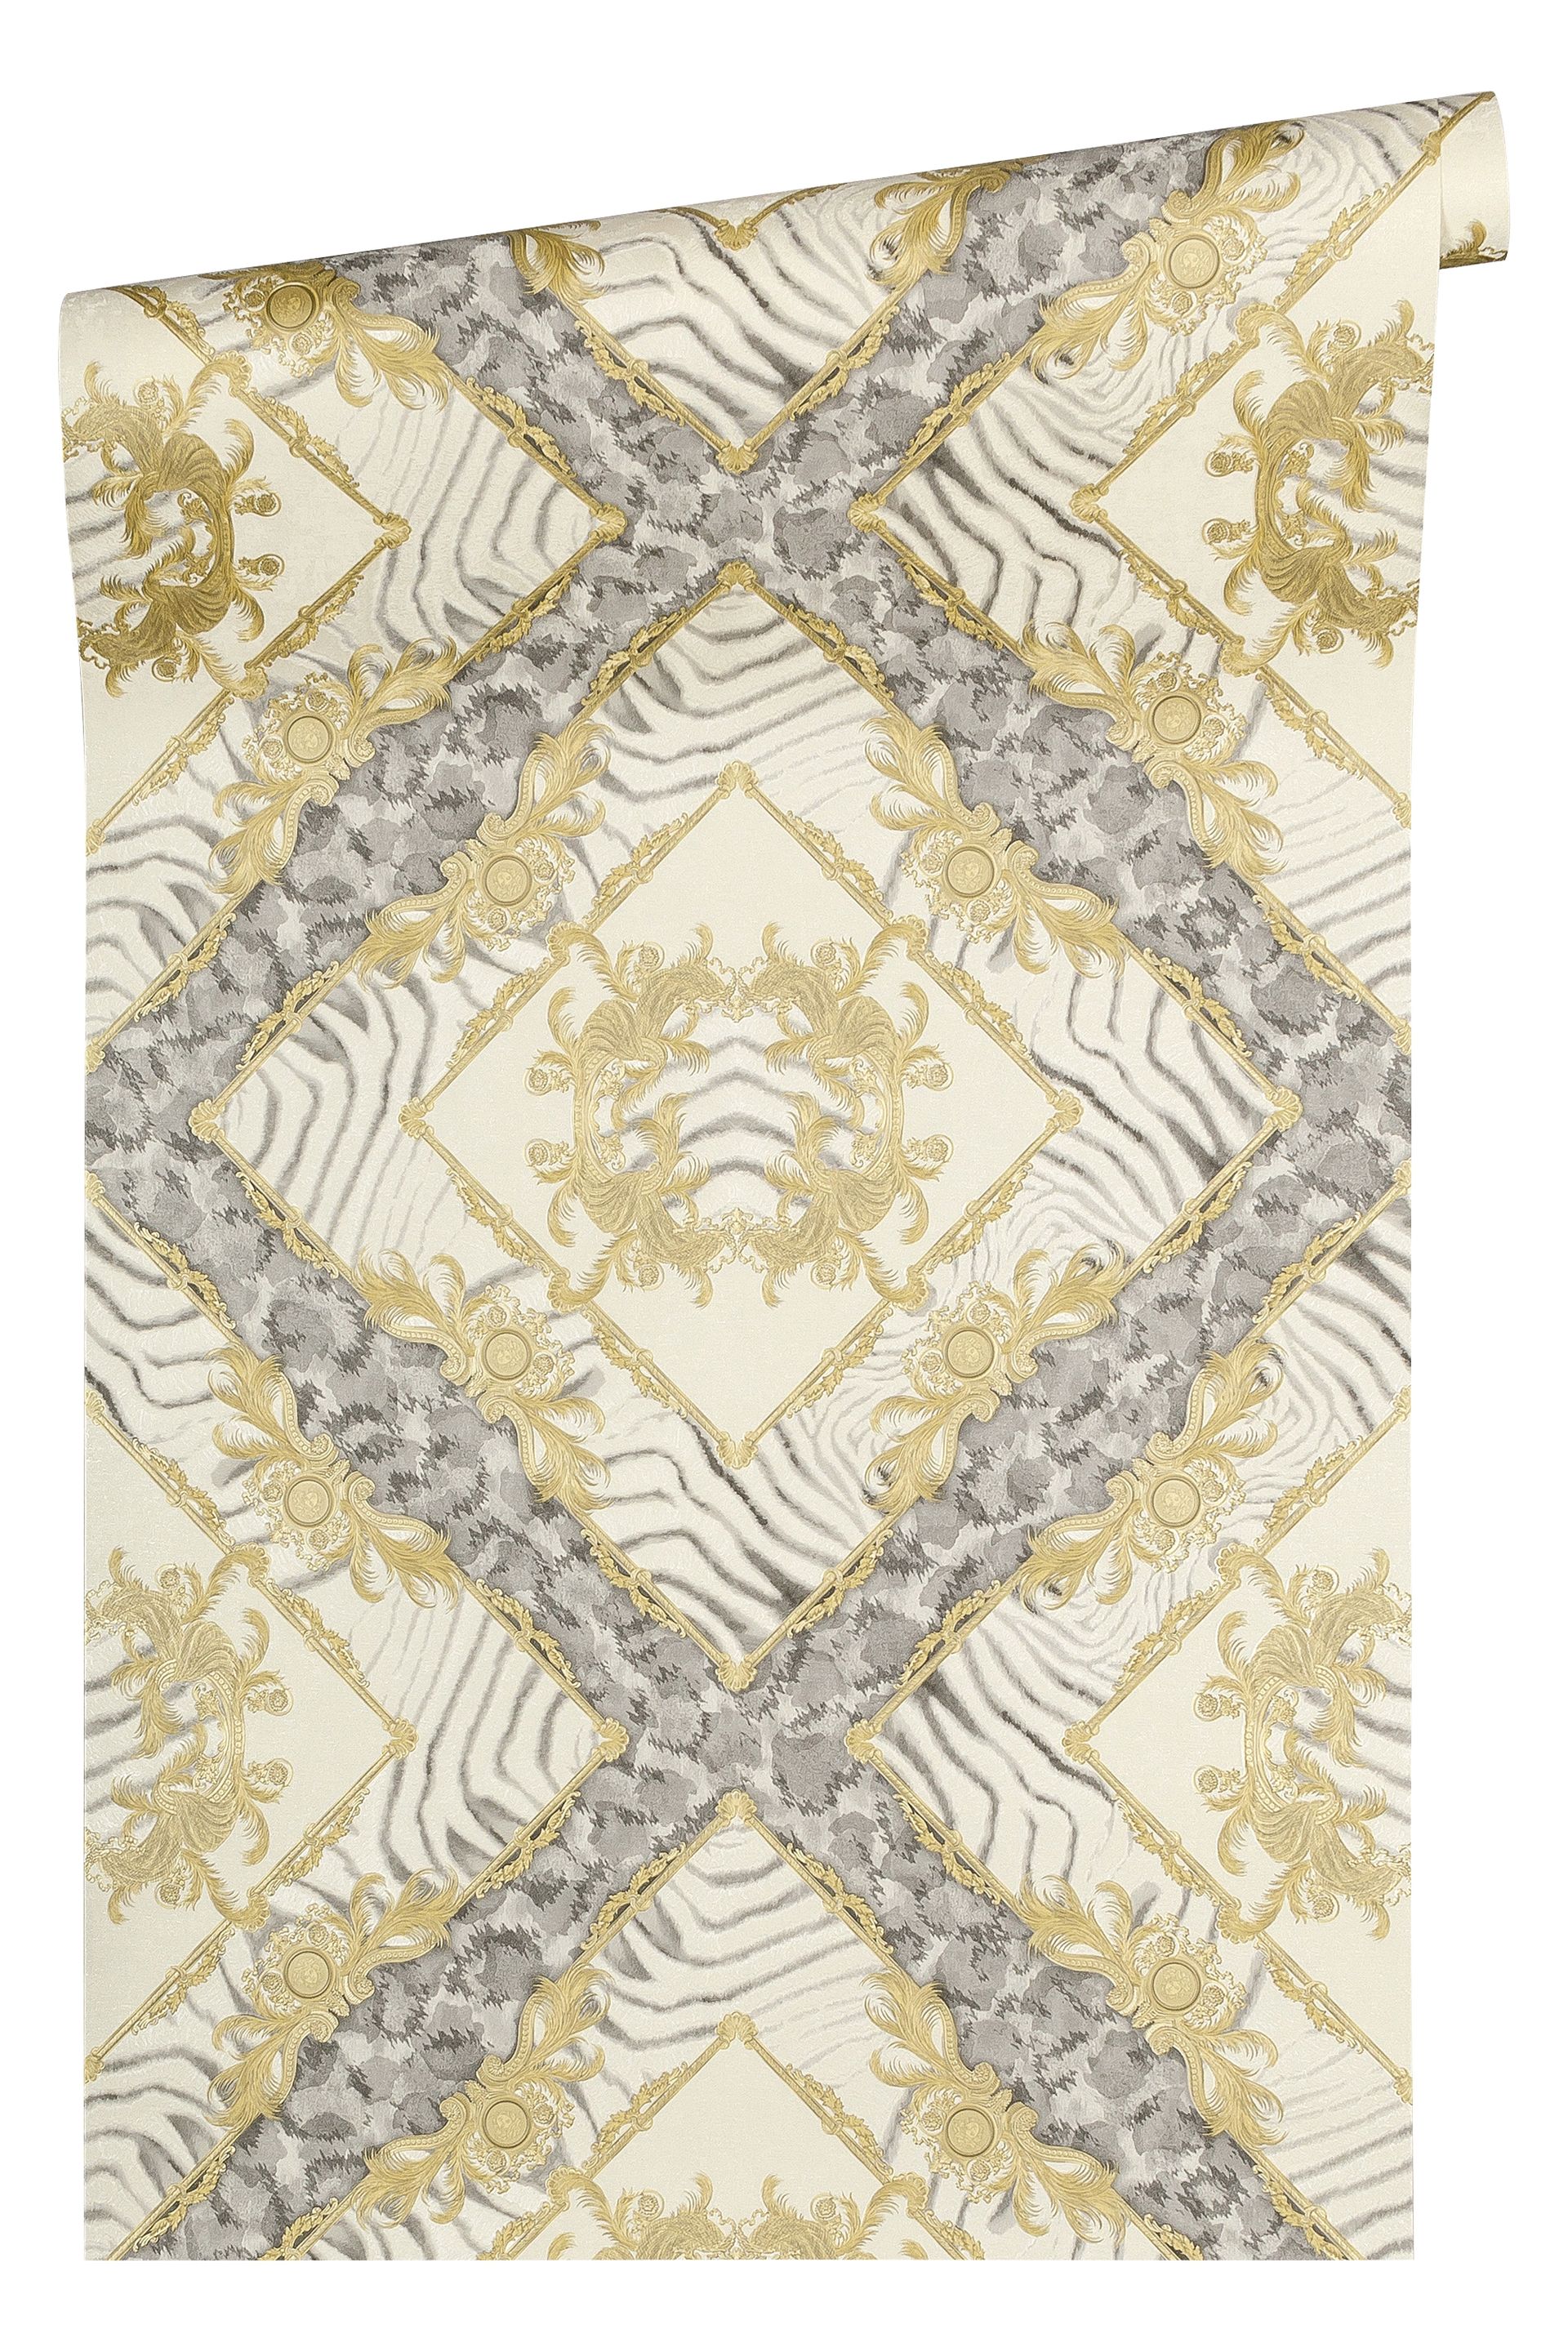 Versace wallpaper Versace 3, Design Tapete, grau, gold 349042